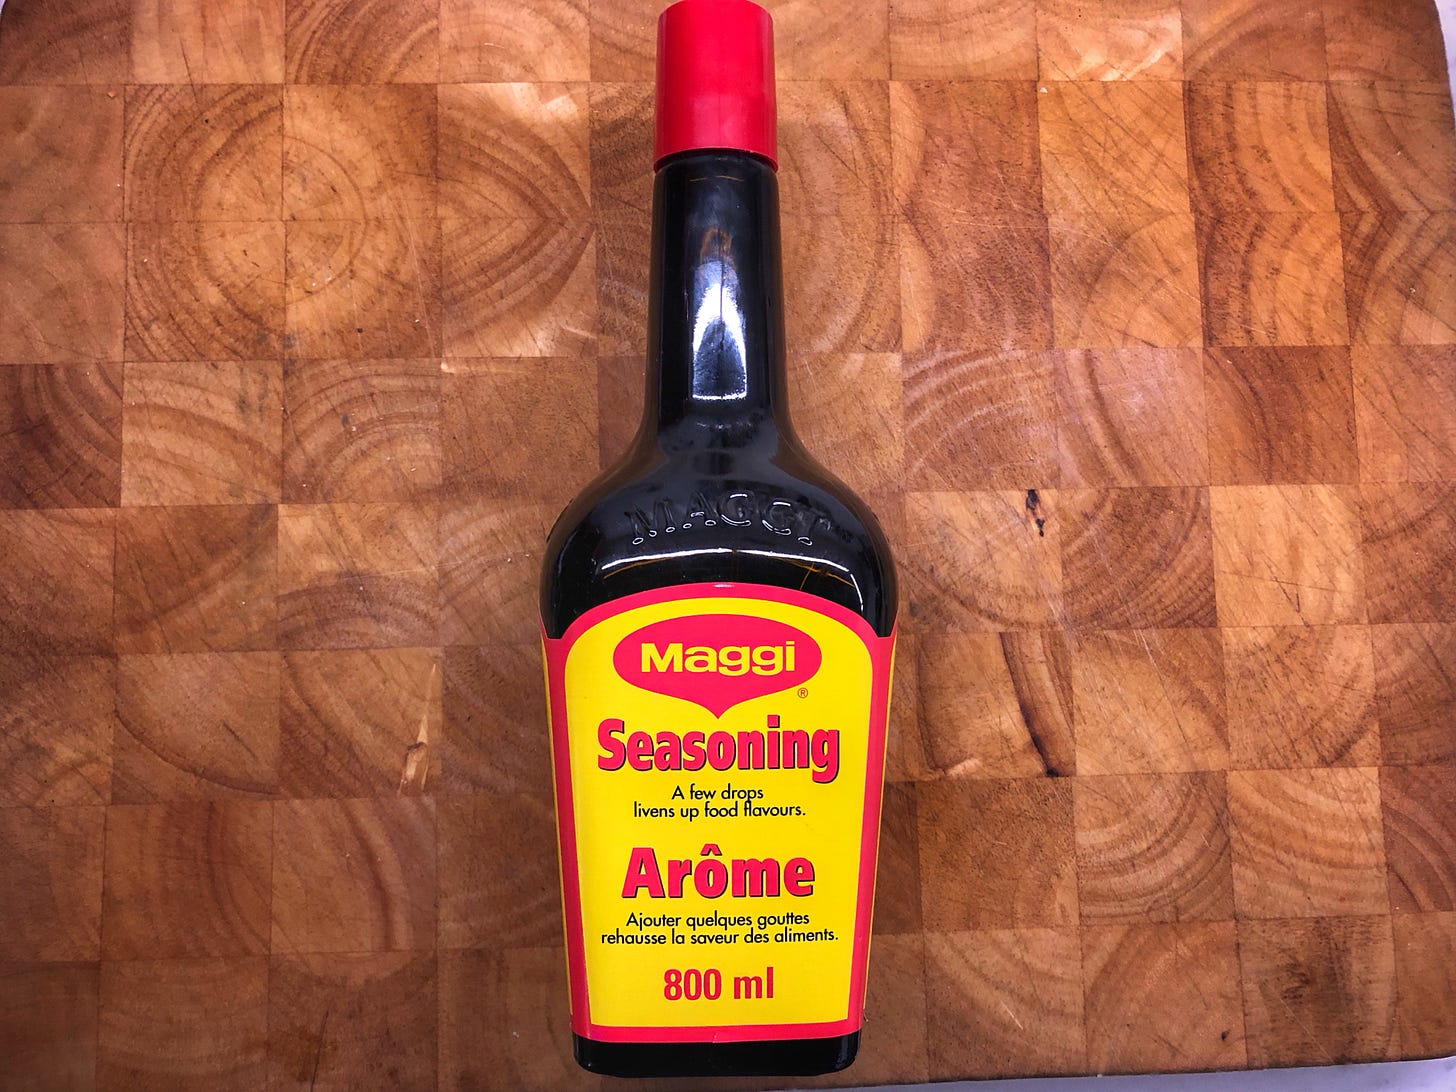 An 800ml bottle of Maggi Seasoning on a cutting board